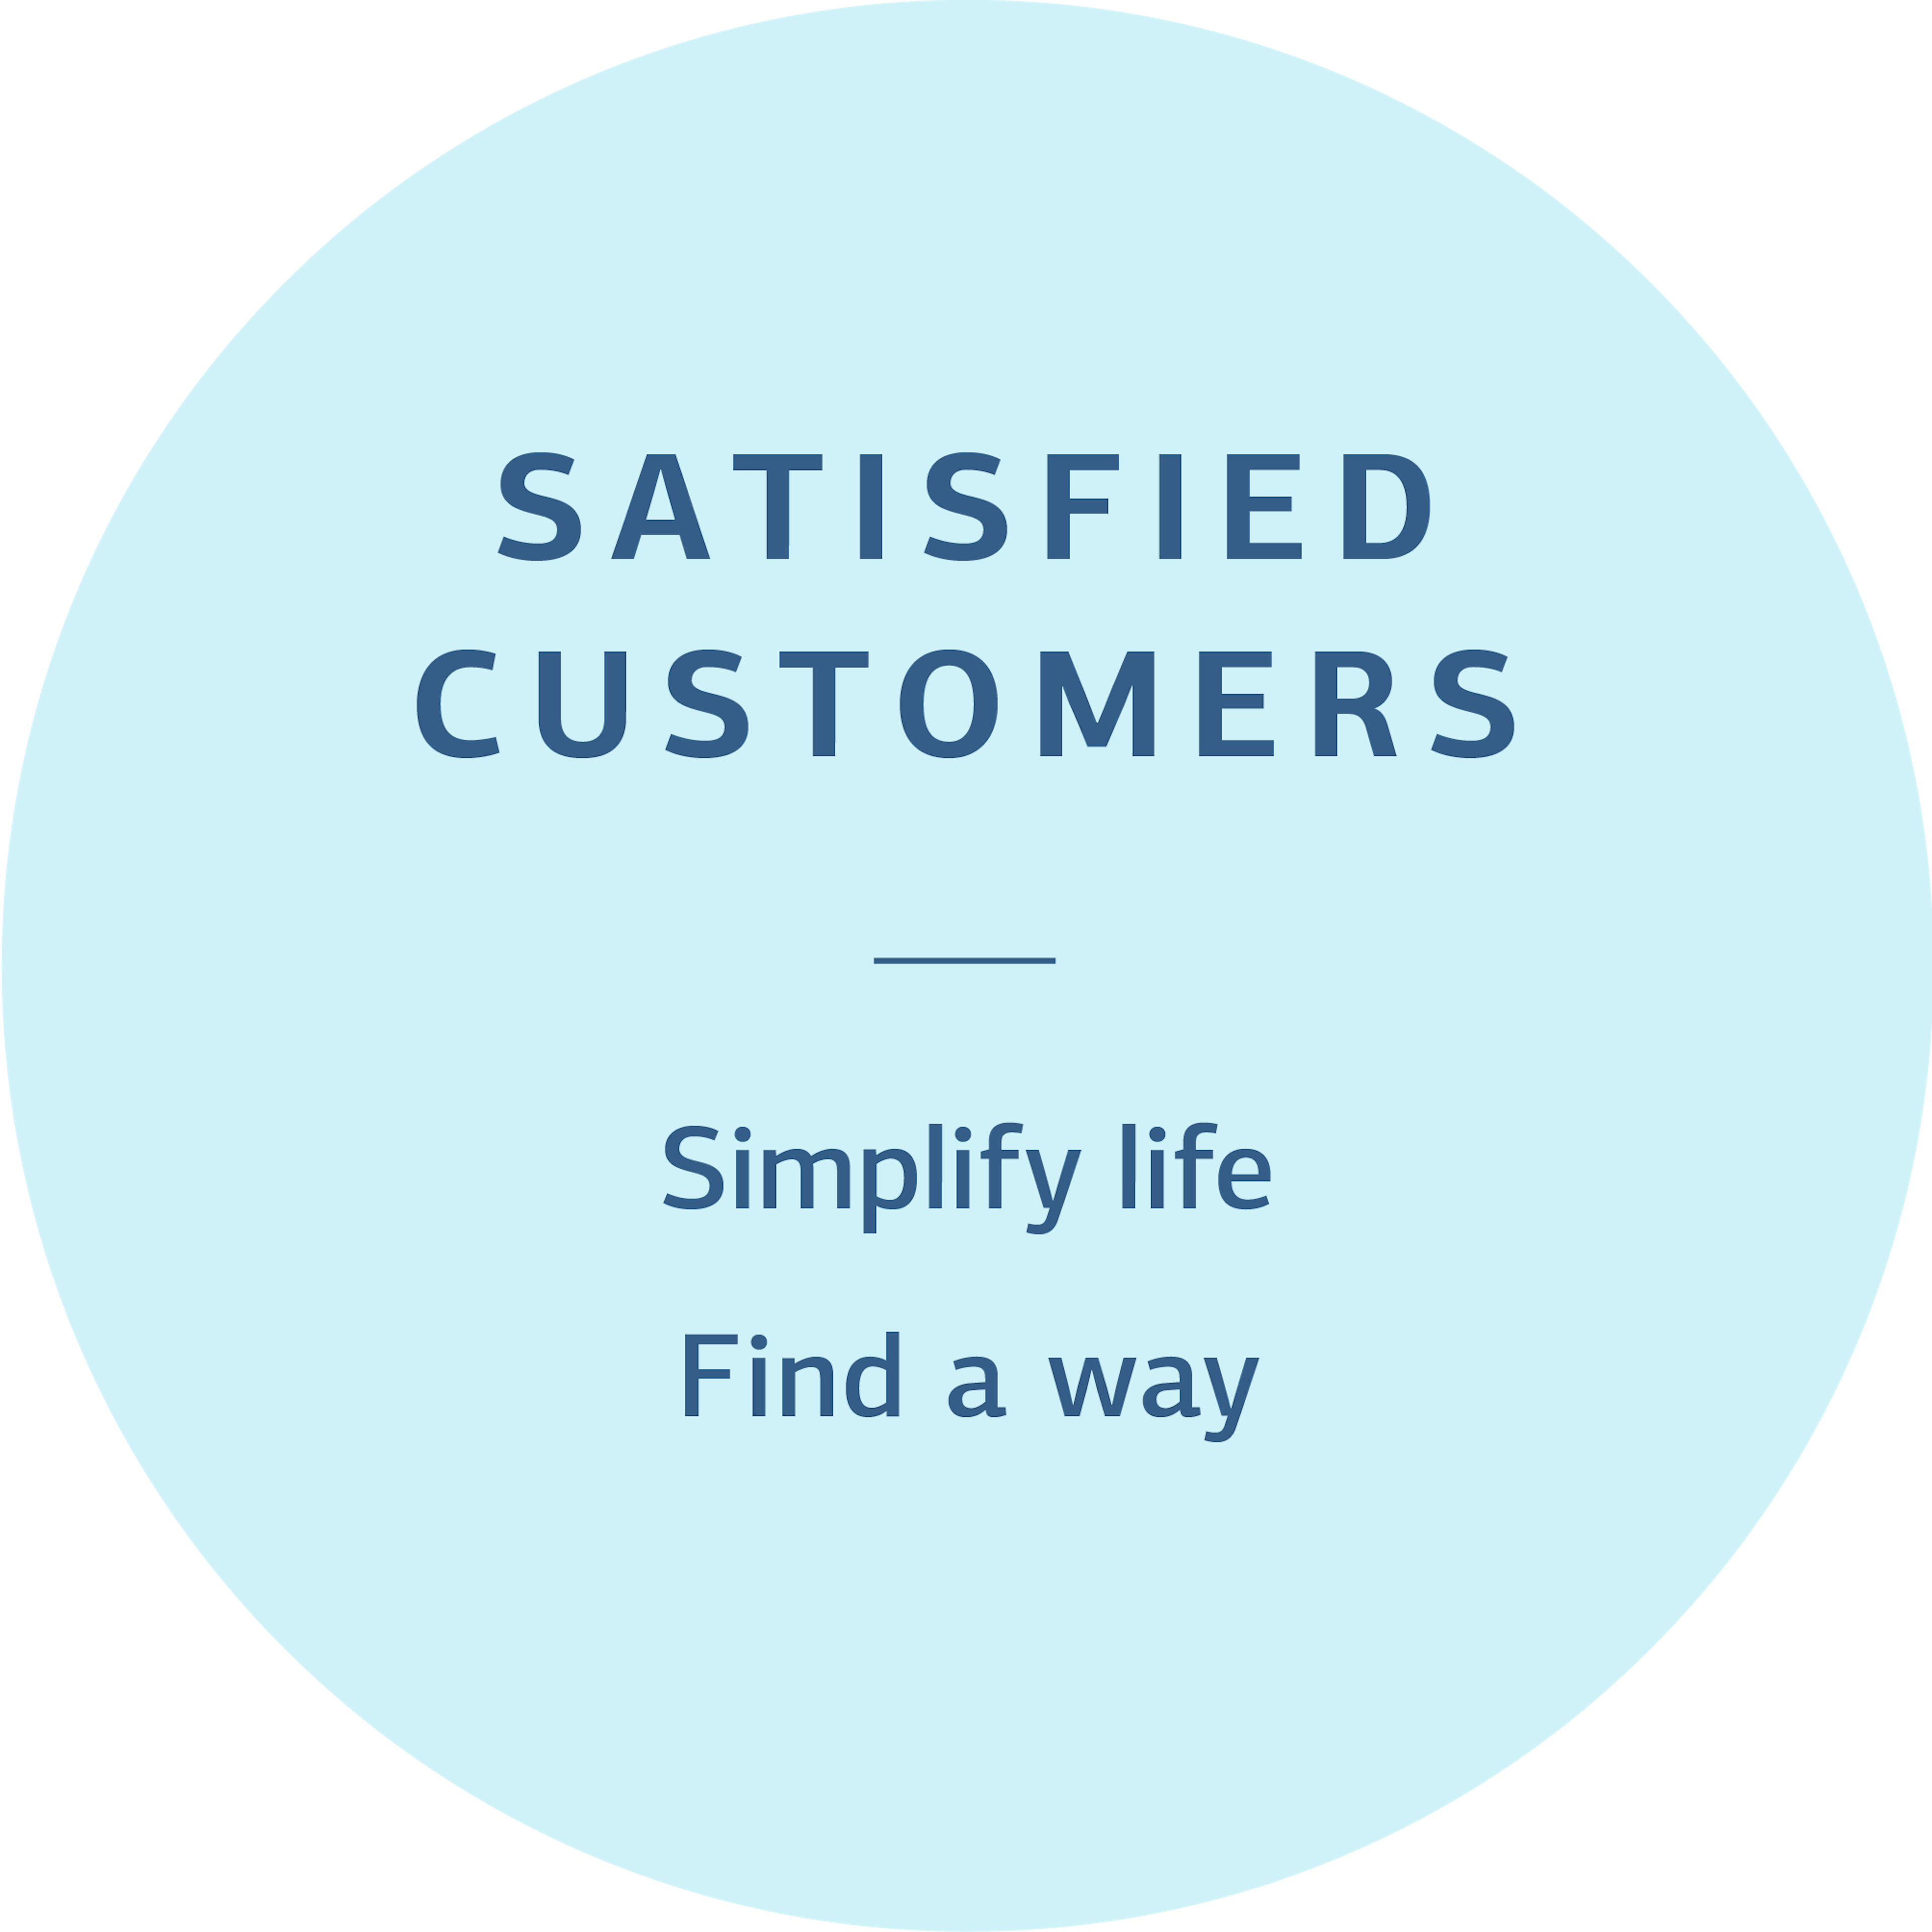 Pillar 1: Satisfied customers